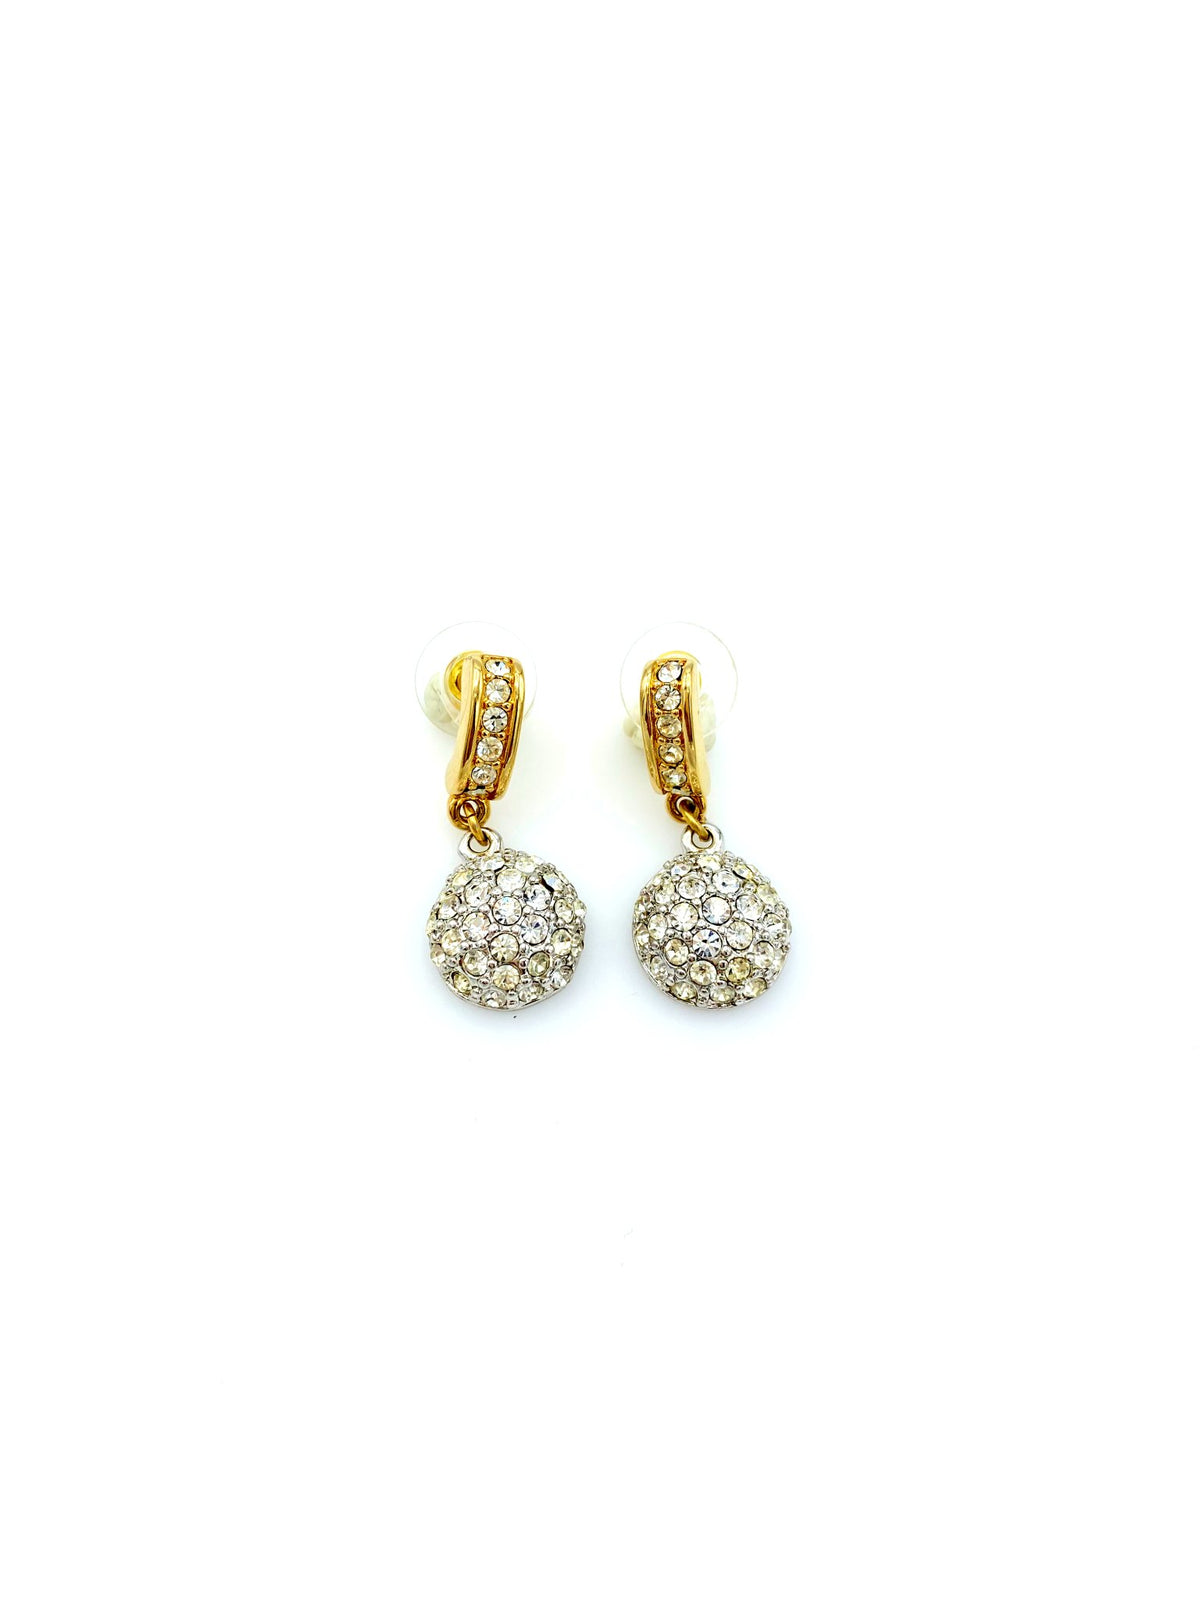 Swarovski Pave Crystal Dangle Vintage Gold Earrings - 24 Wishes Vintage Jewelry